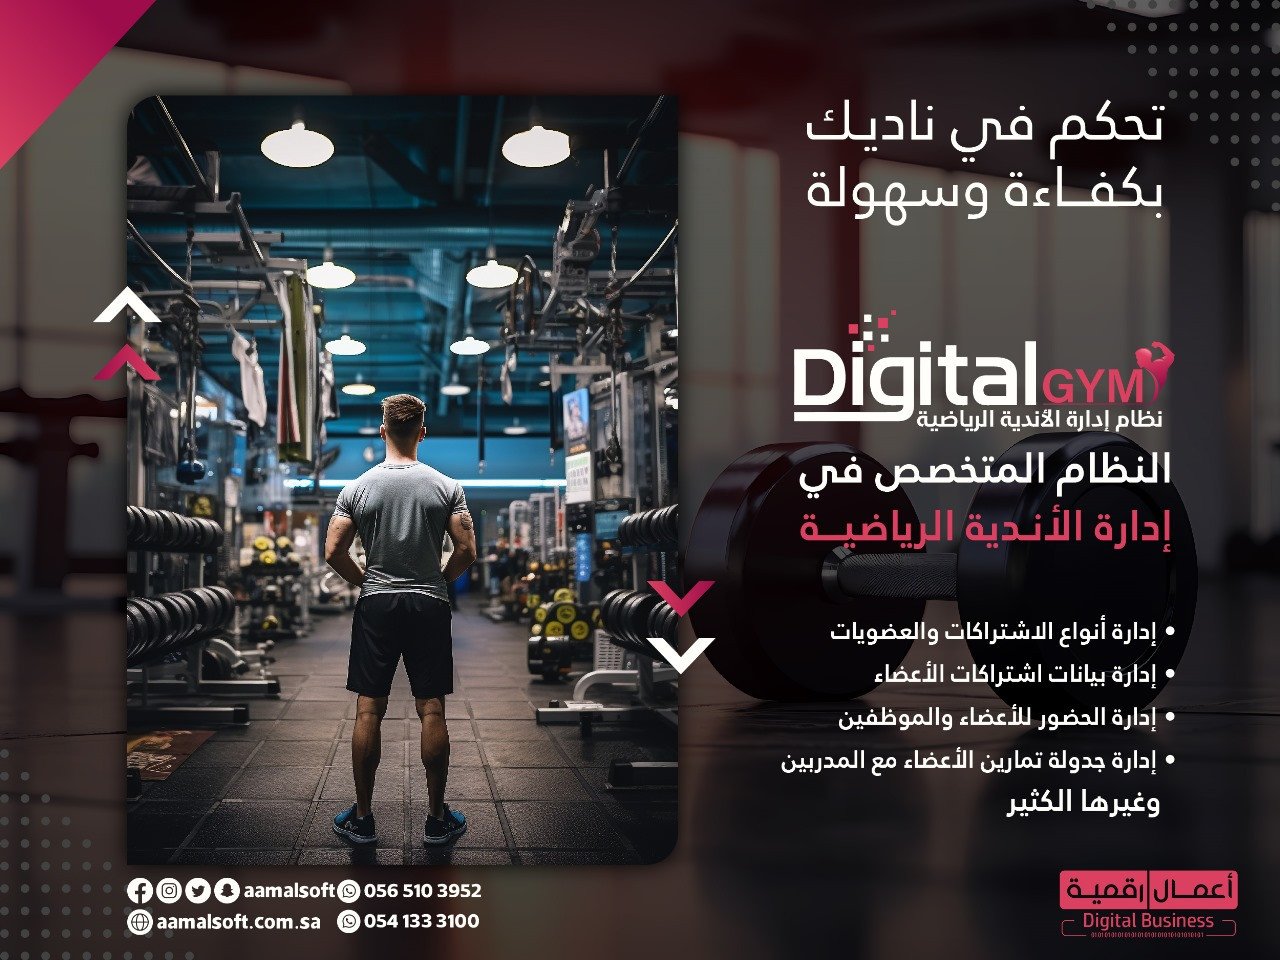 DigitalGYM: The digital revolution in sports club management!